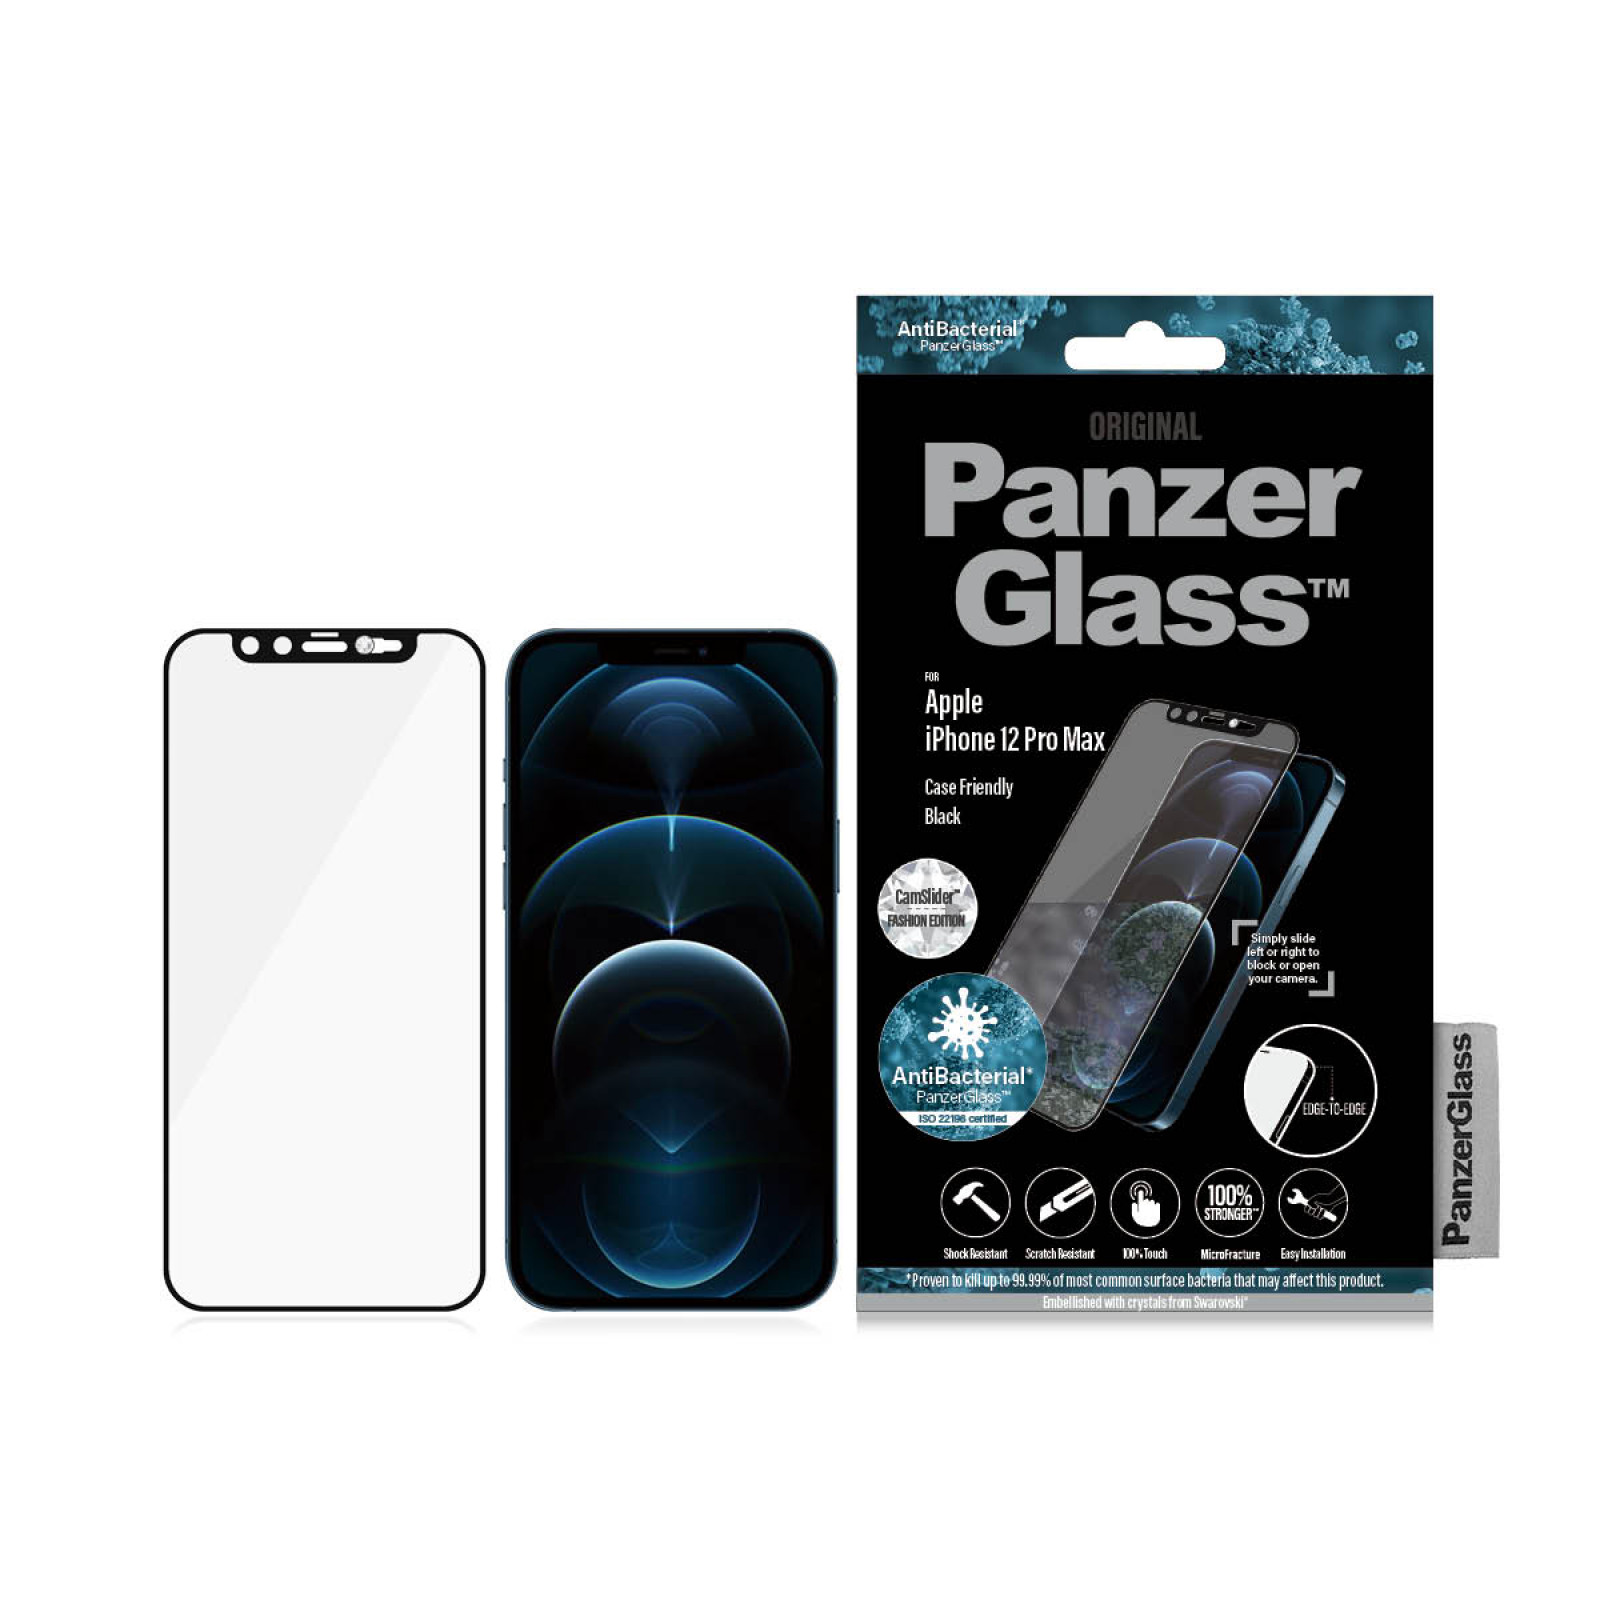 Комплект PanzerGlass Pophit Bundle за Apple Iphone 12  Pro Max (Стъклен протектор , Spray, Popsocket)